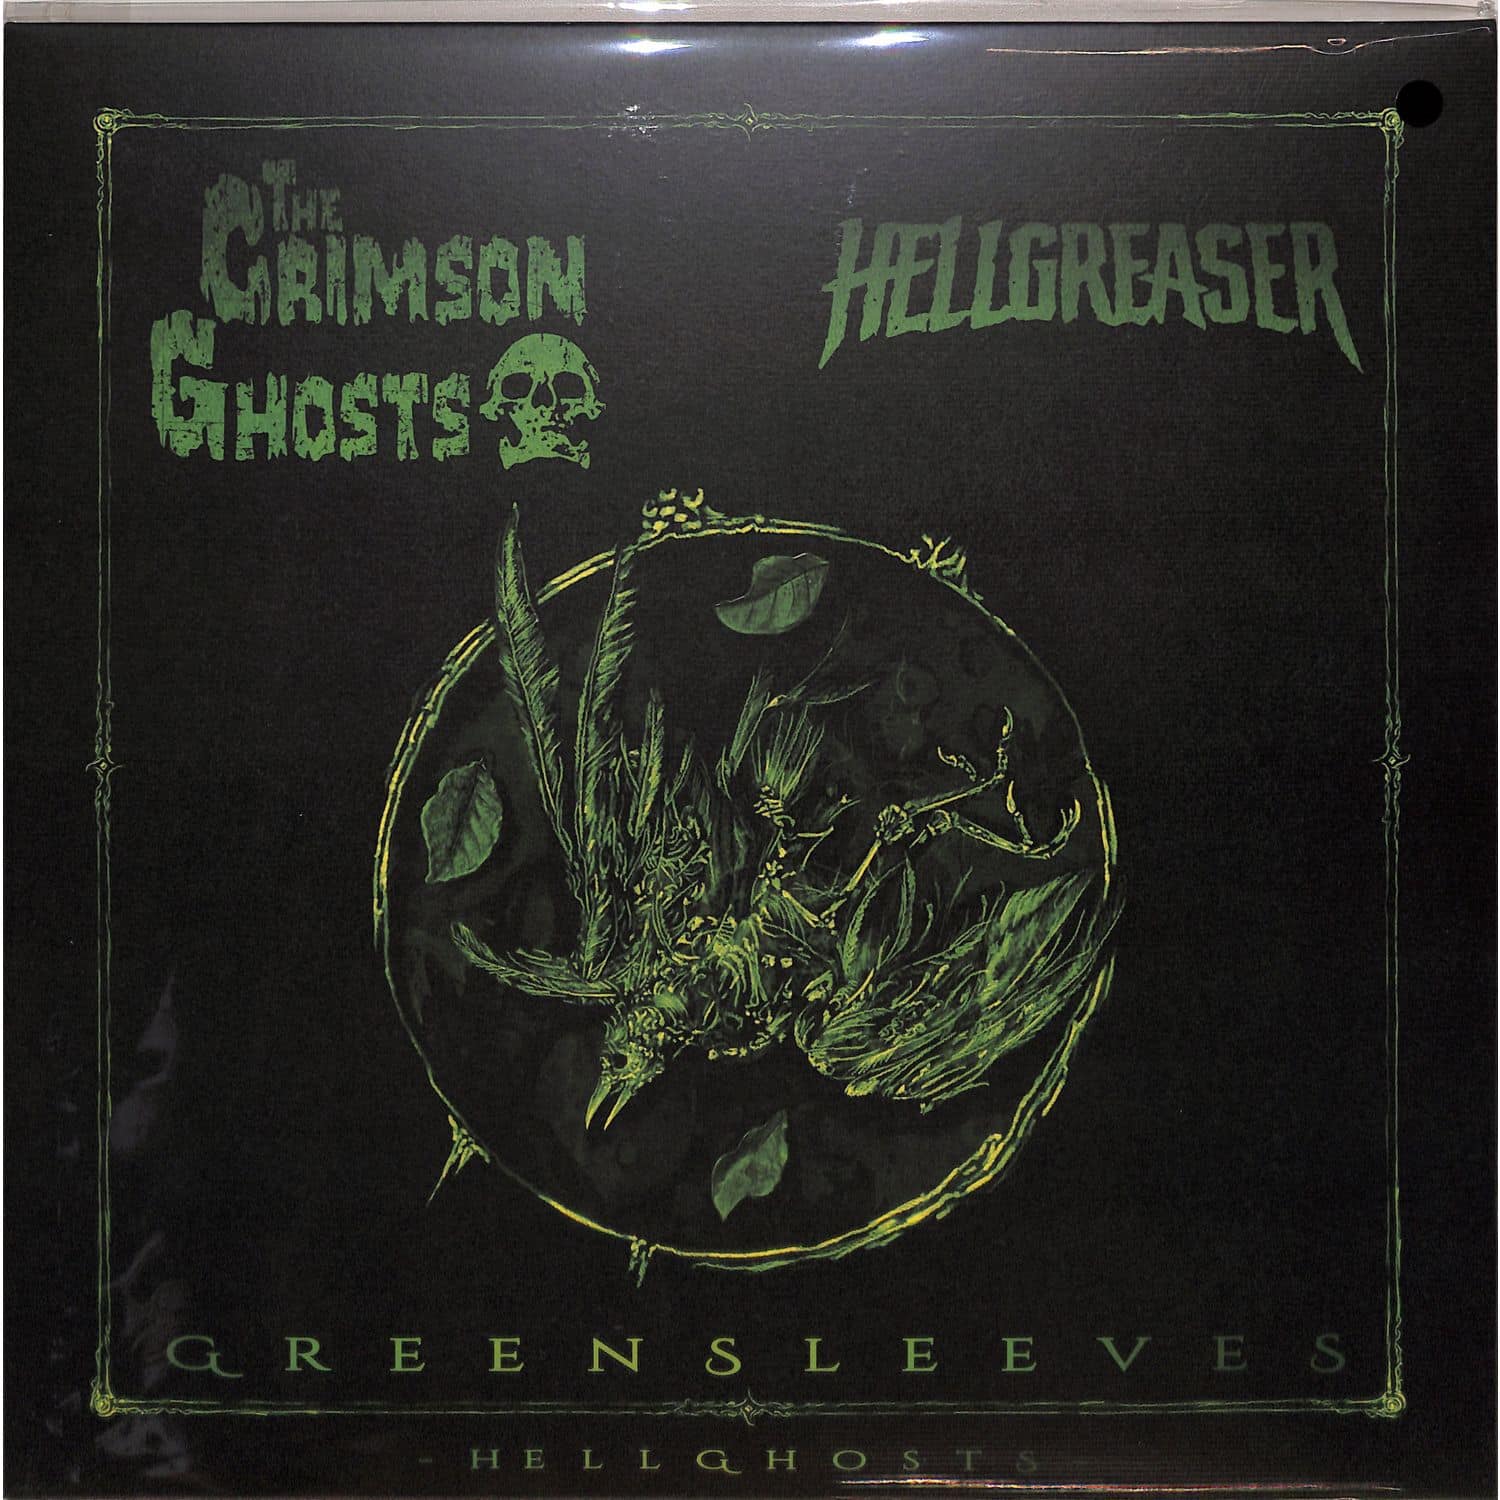 Hellgreaser / The Crimson Ghosts - GREENSLEEVES 